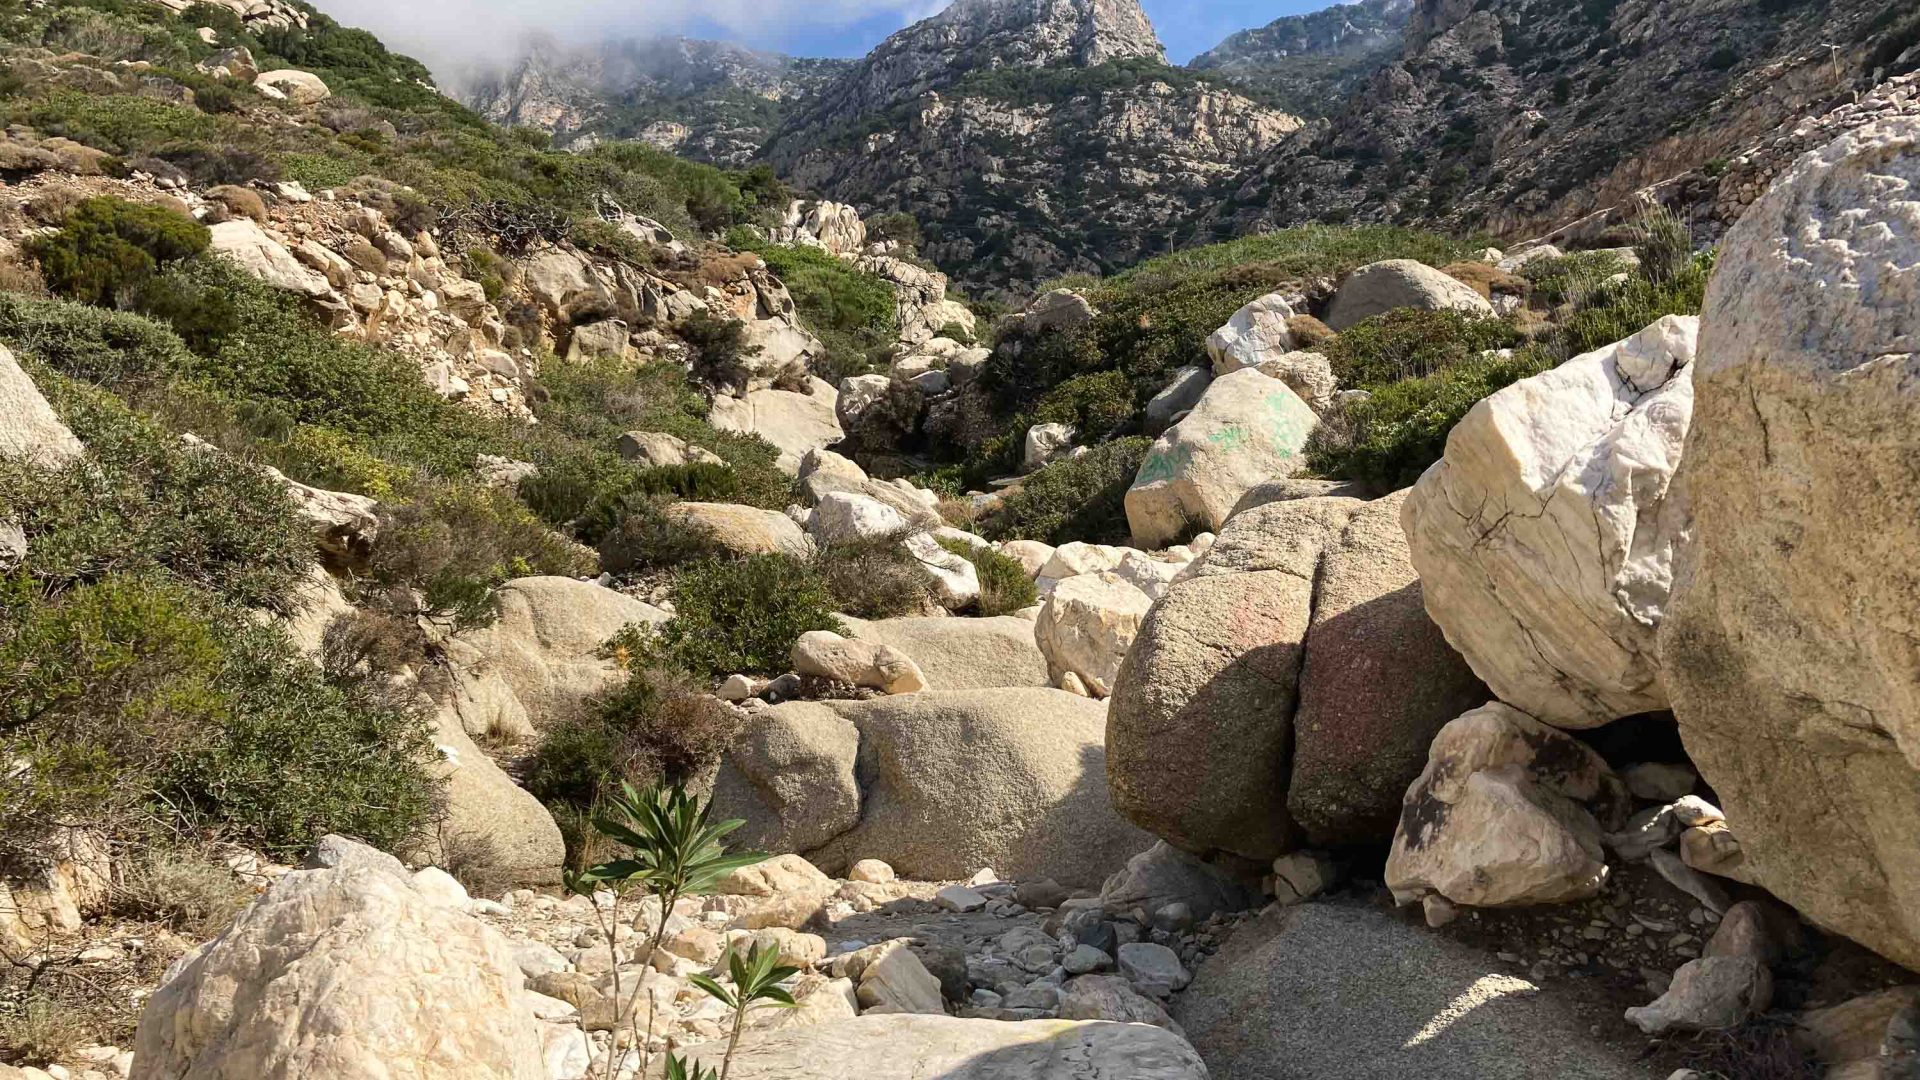 Steep mountains of granite.